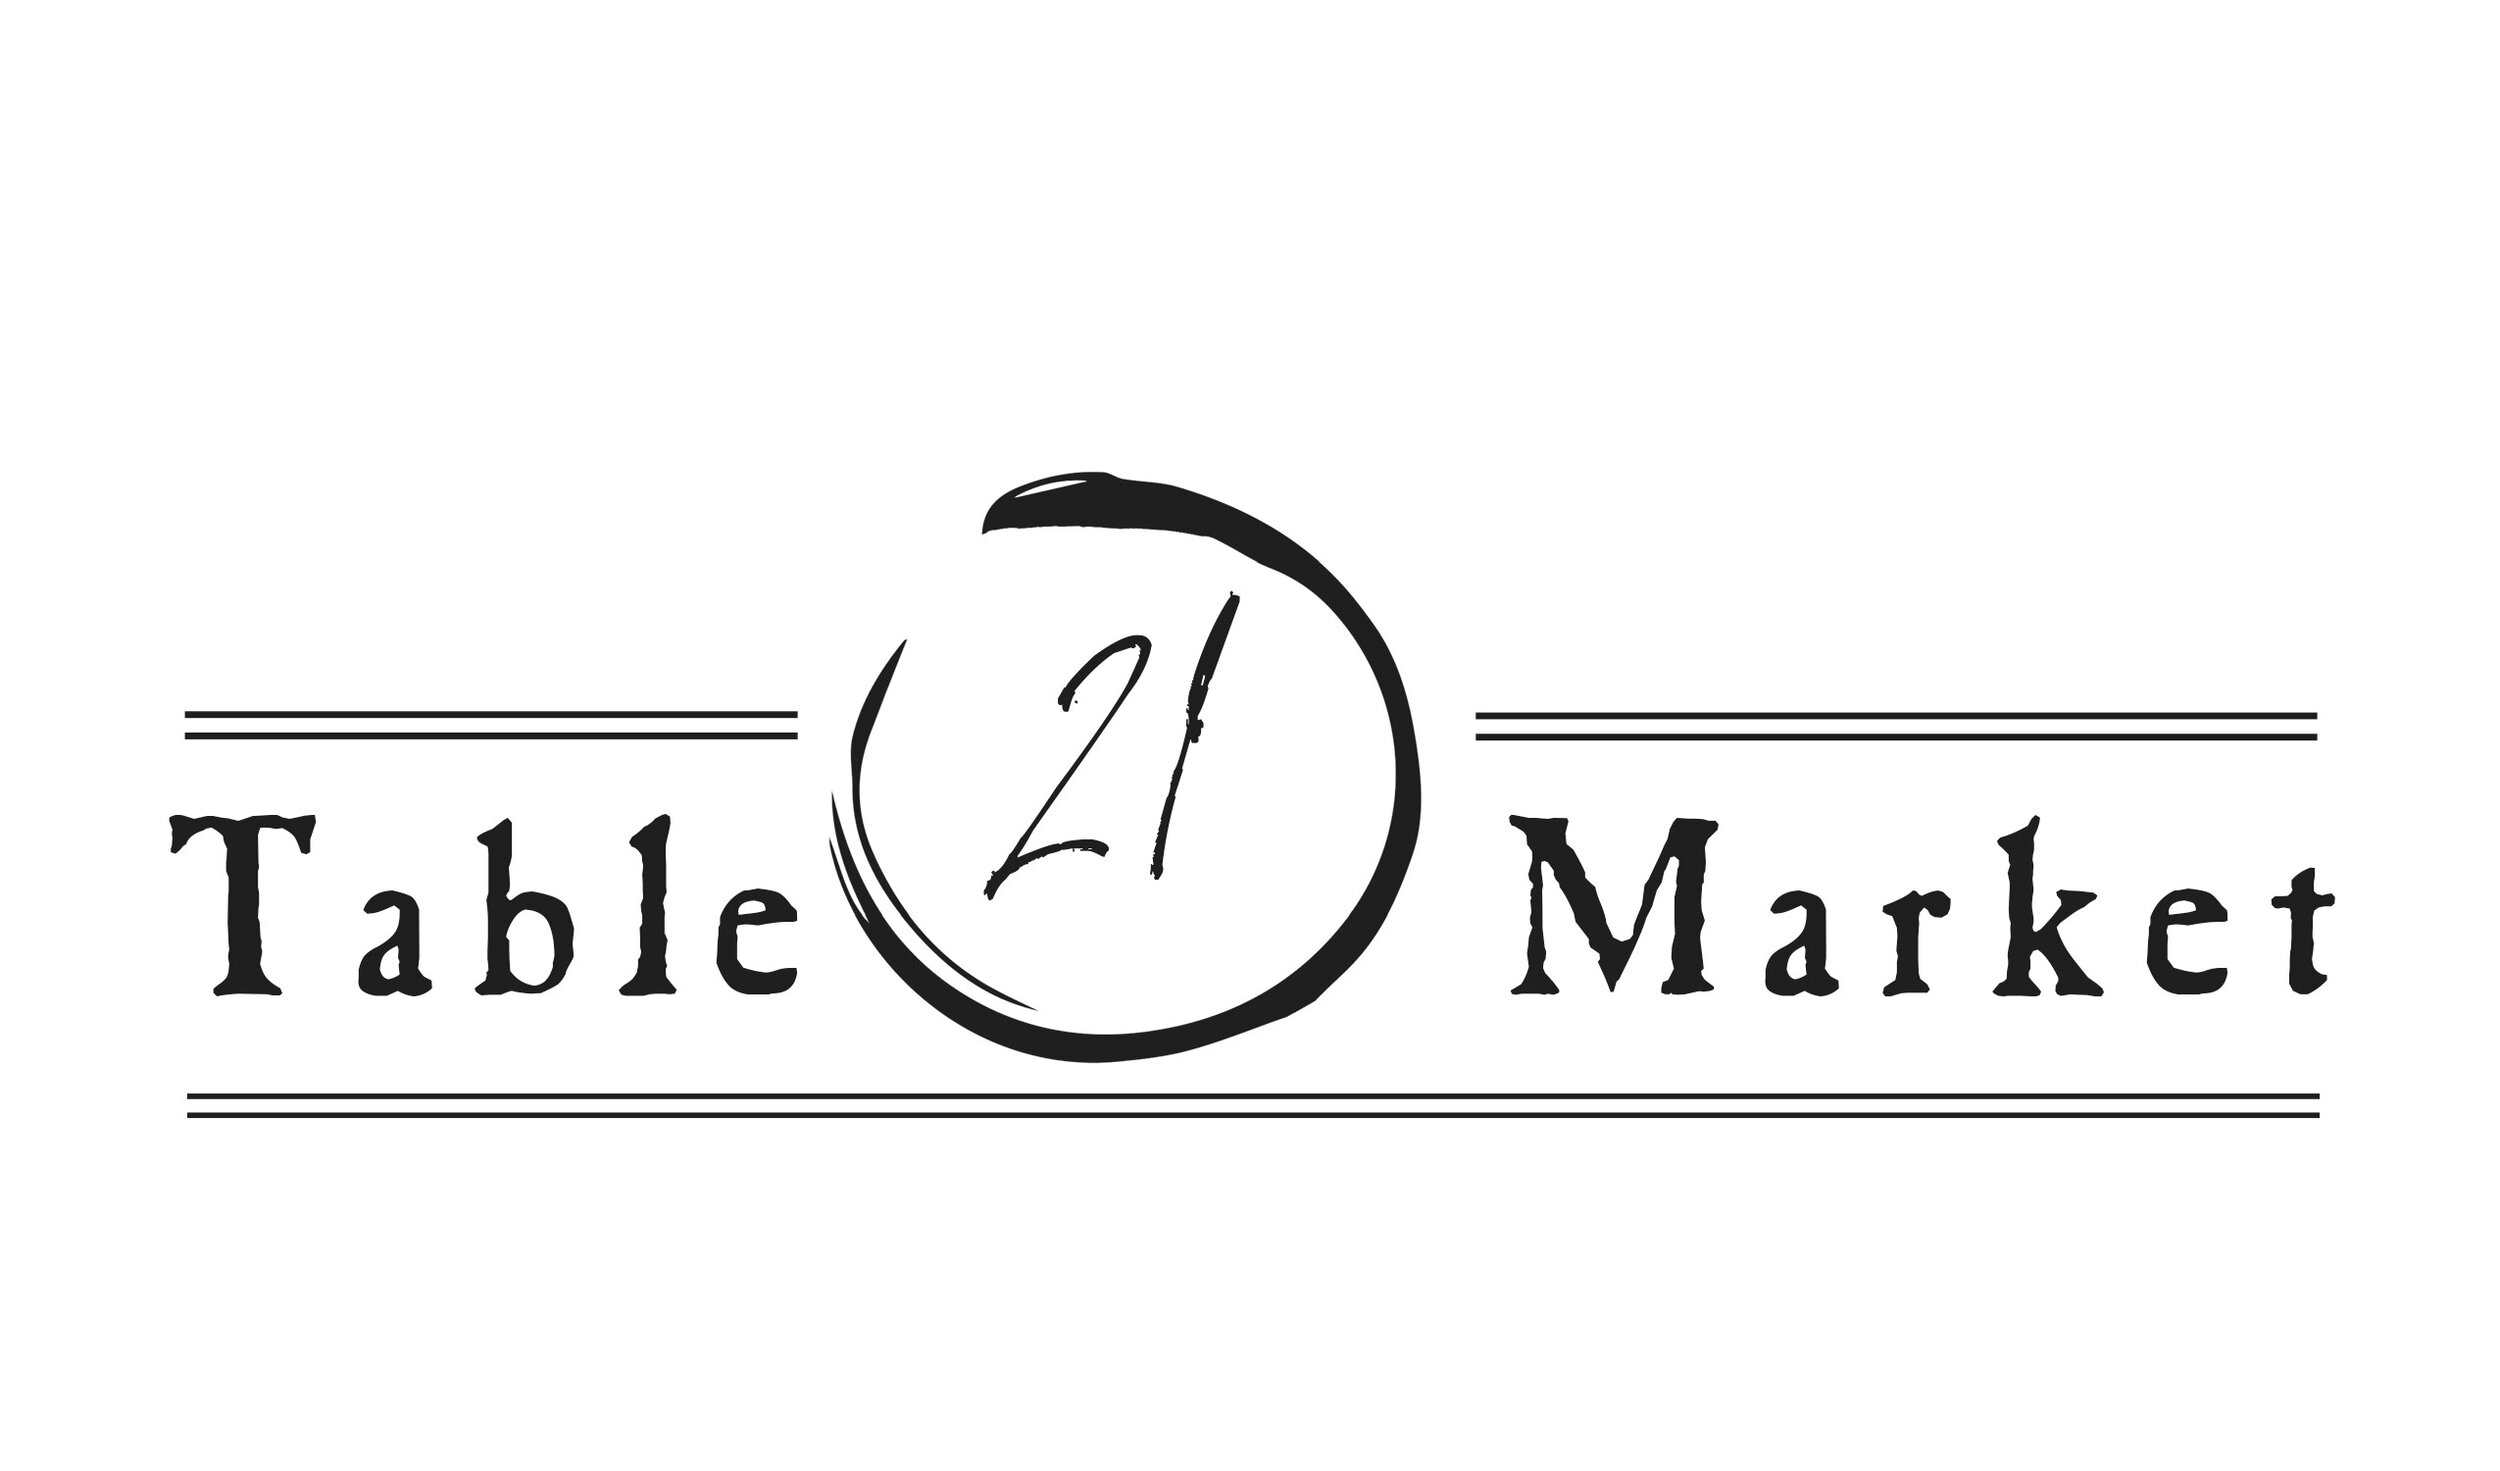 Table 21 Market